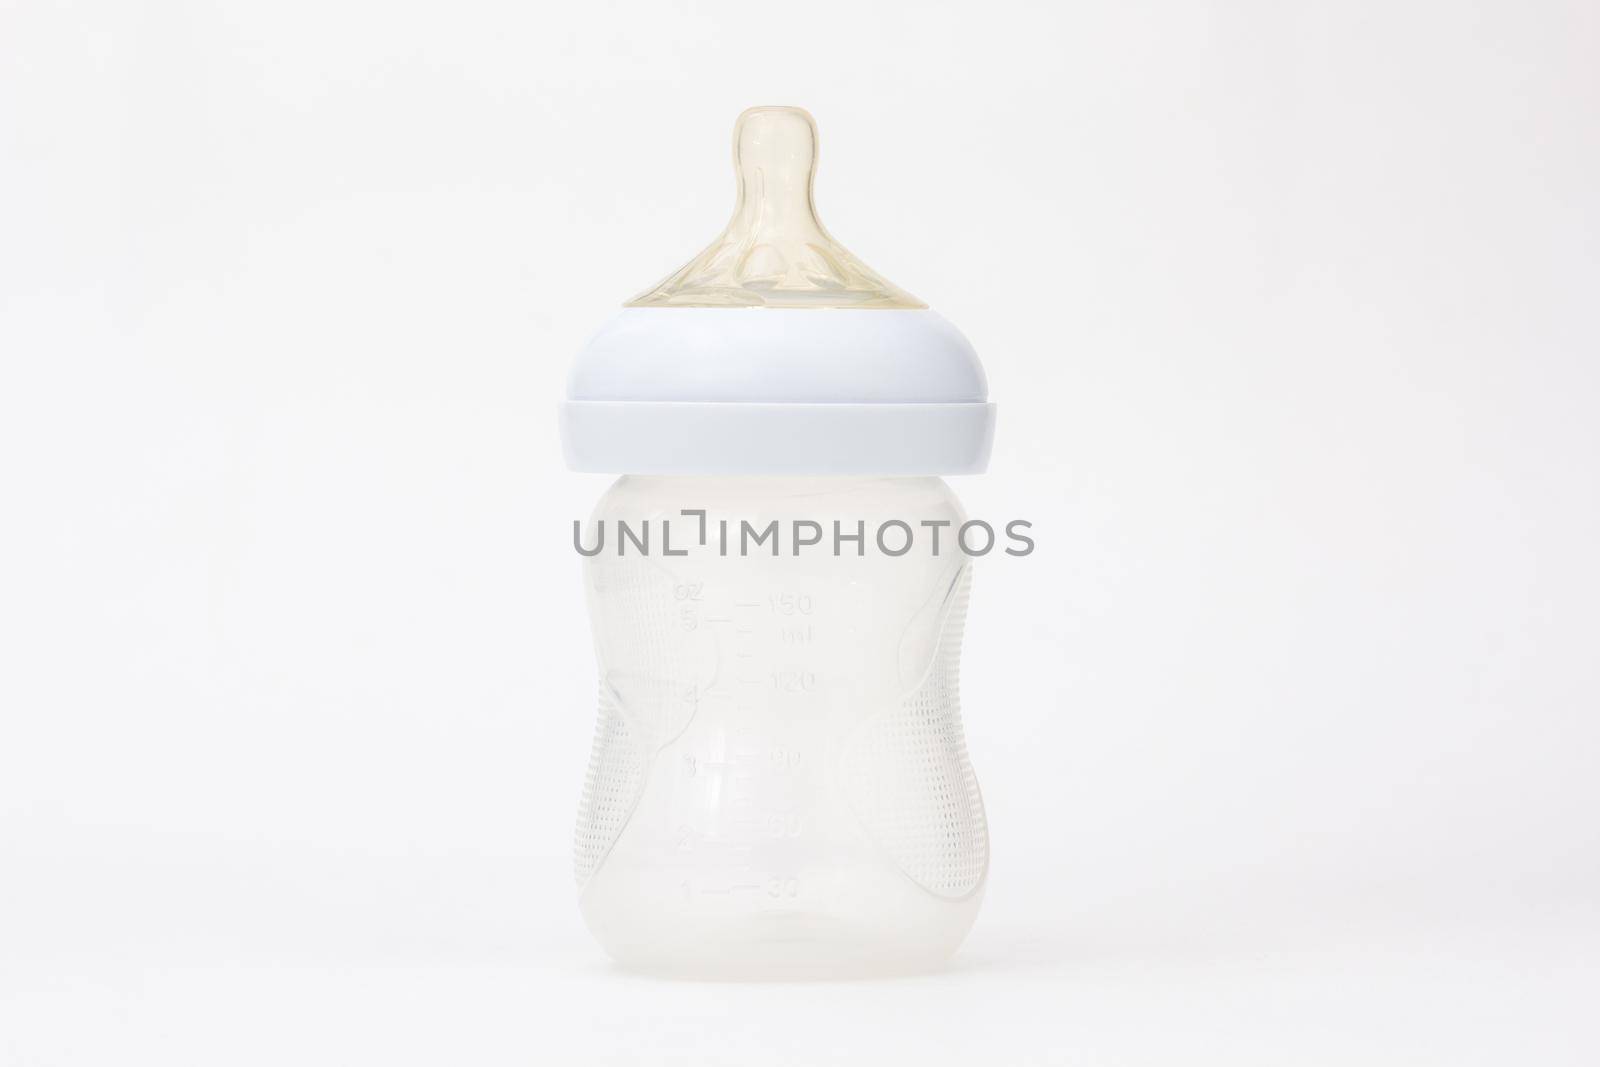 Isolated empty bottle feeding for baby on white background